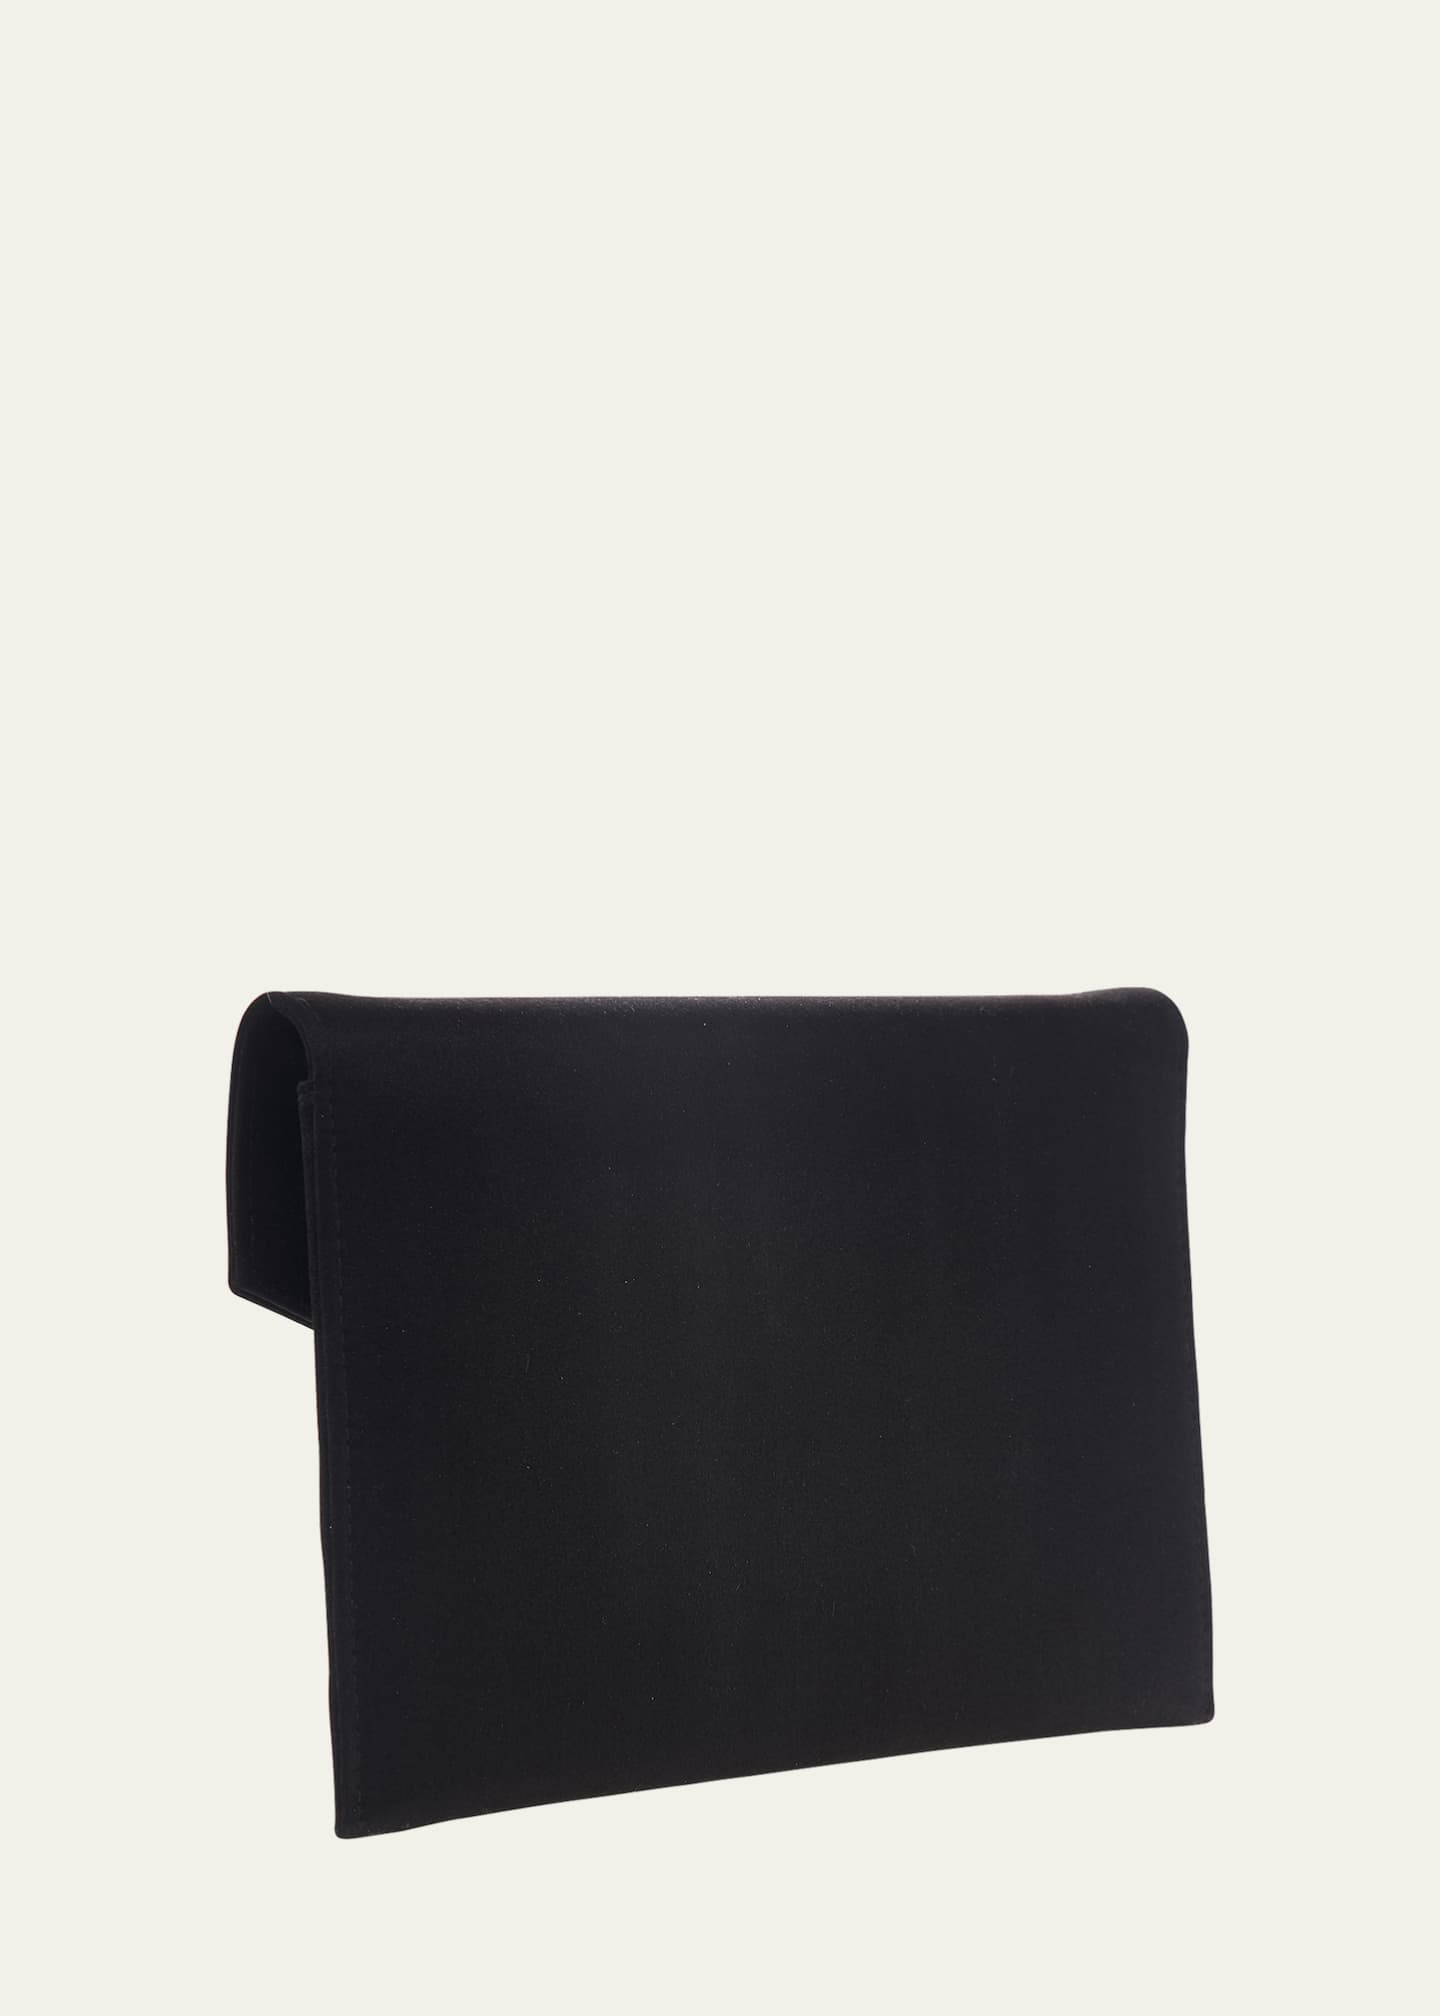 Judith Leiber Crystal Bow Satin Envelope Clutch Bag in Black